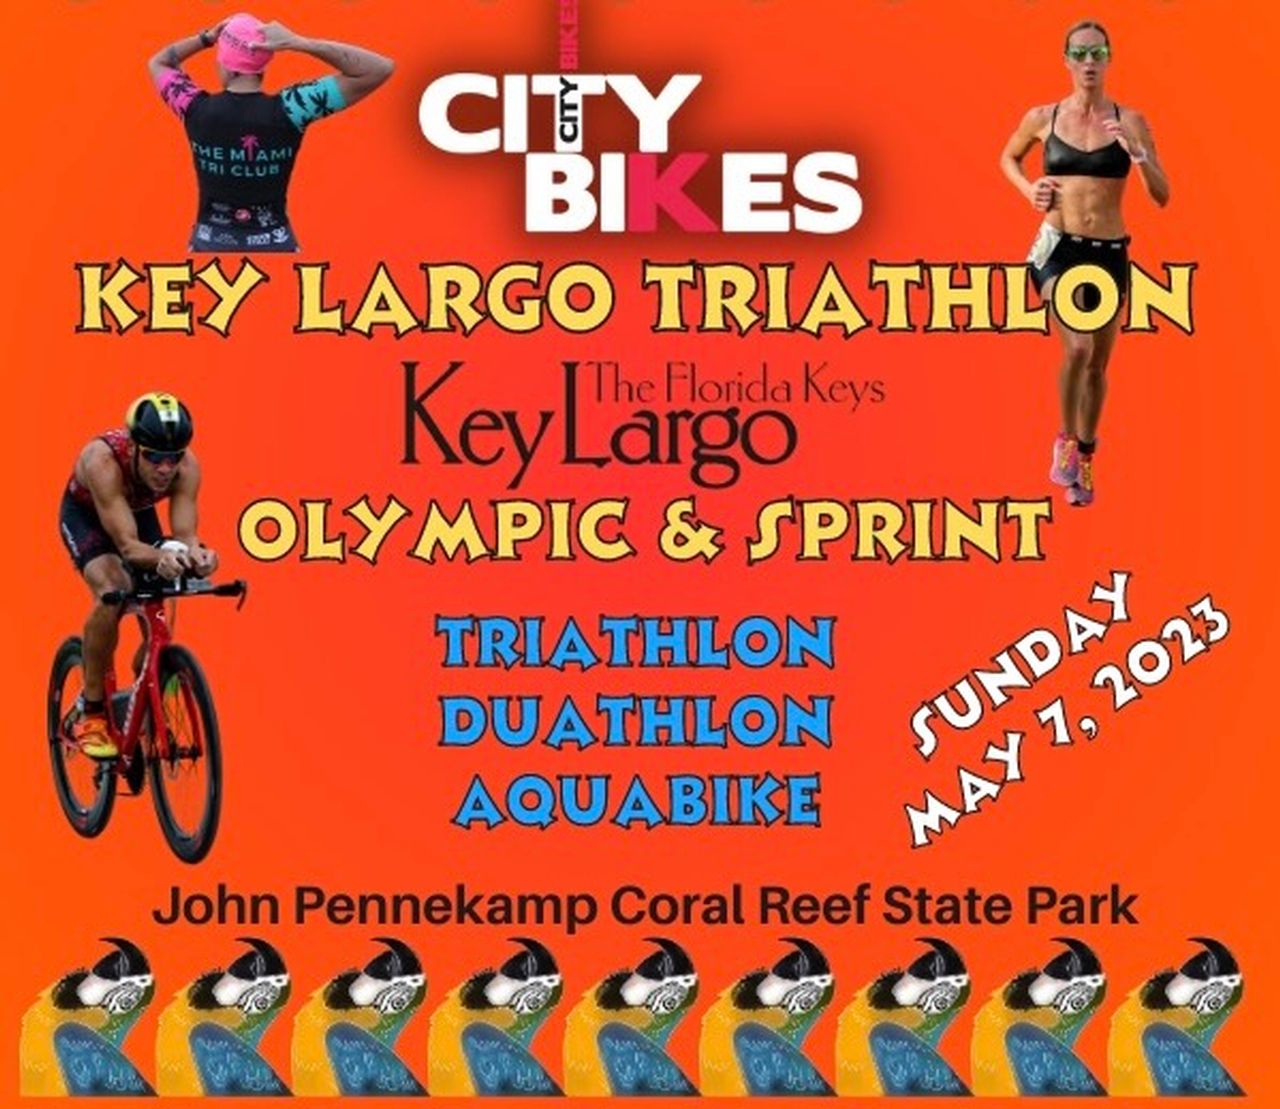 Key Largo Triathlon to Test Athletes’ Endurance in Subtropical Setting